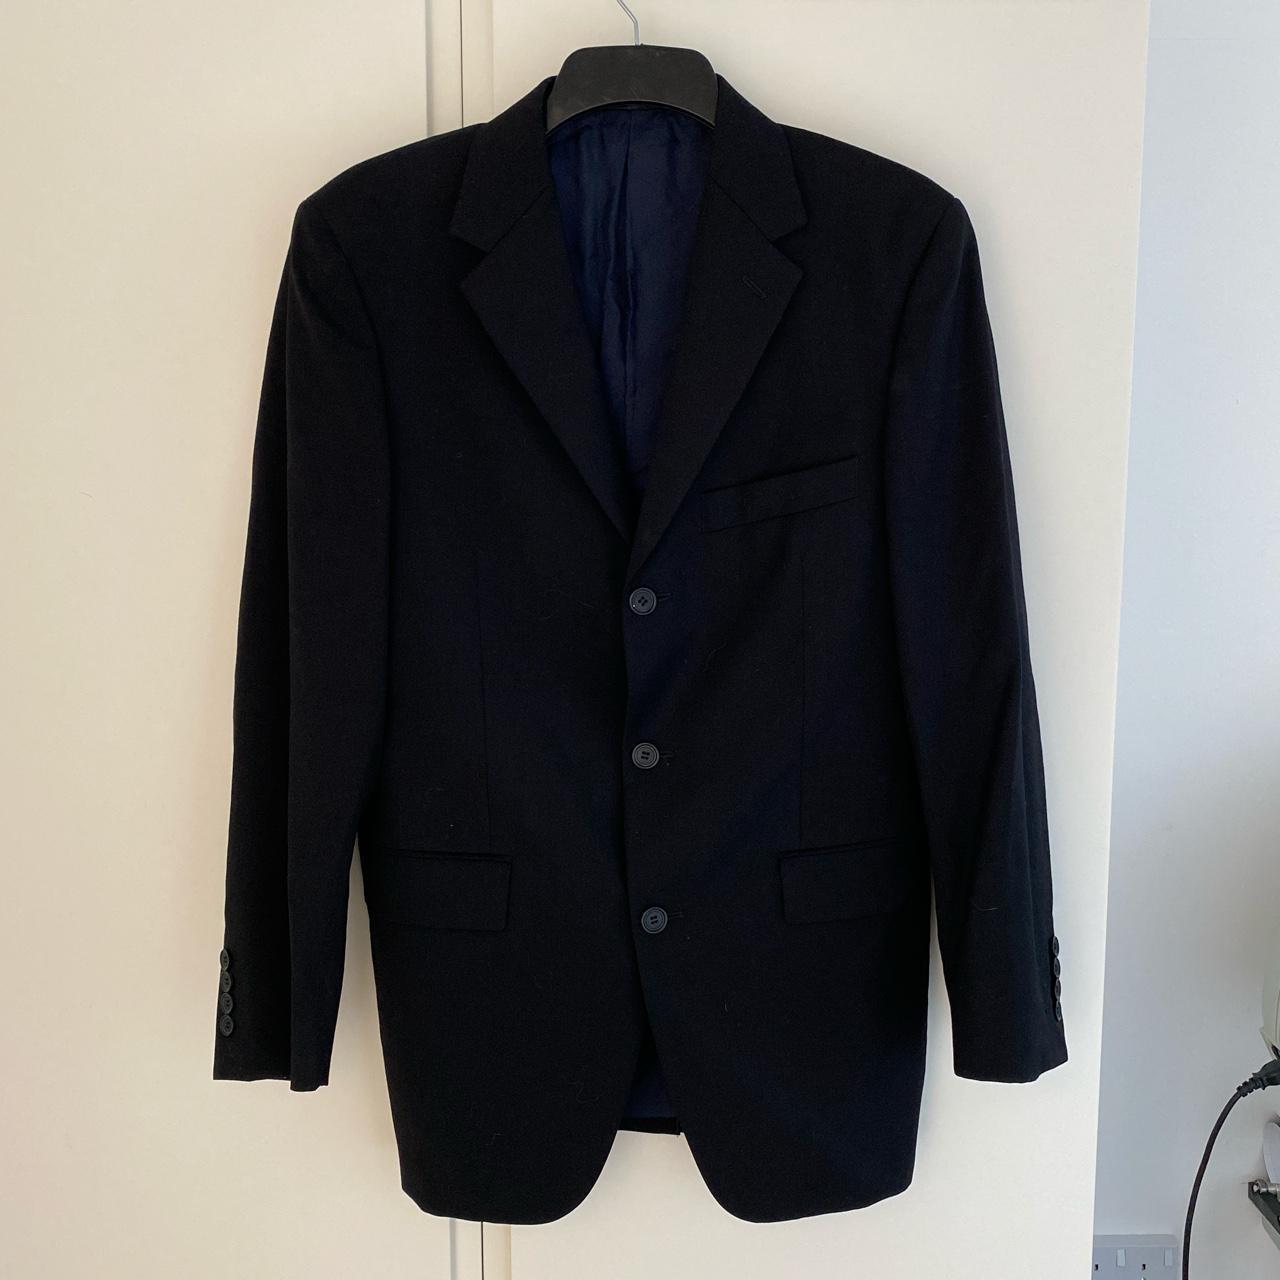 Ysl black suit jacket. In good condition. Selling... - Depop